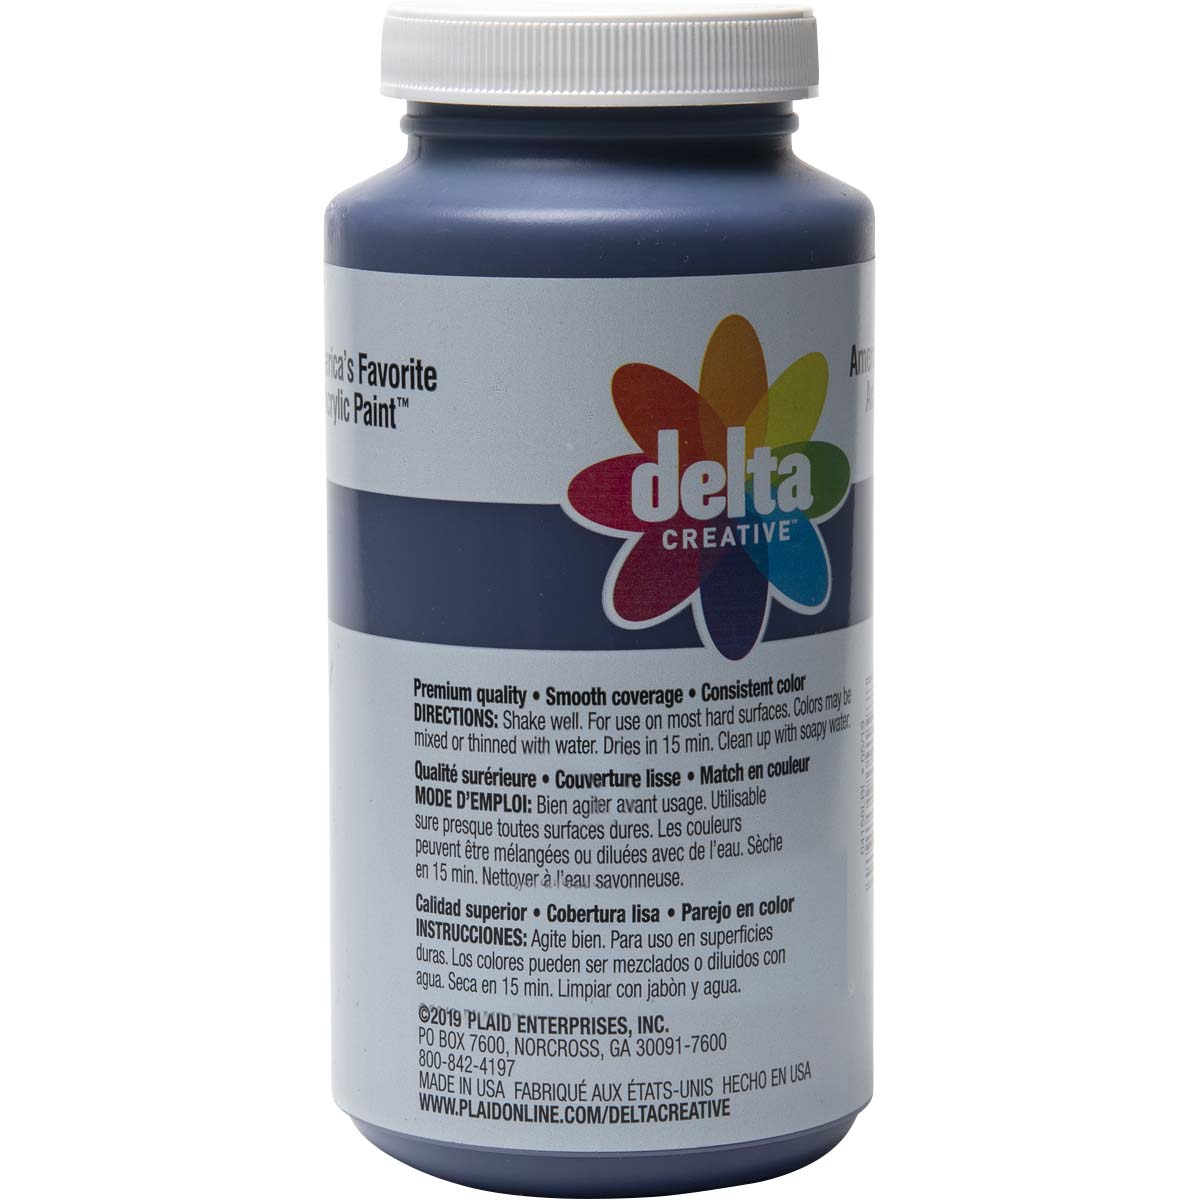 Delta Ceramcoat ® Acrylic Paint - Purple, 16 oz. - 04158